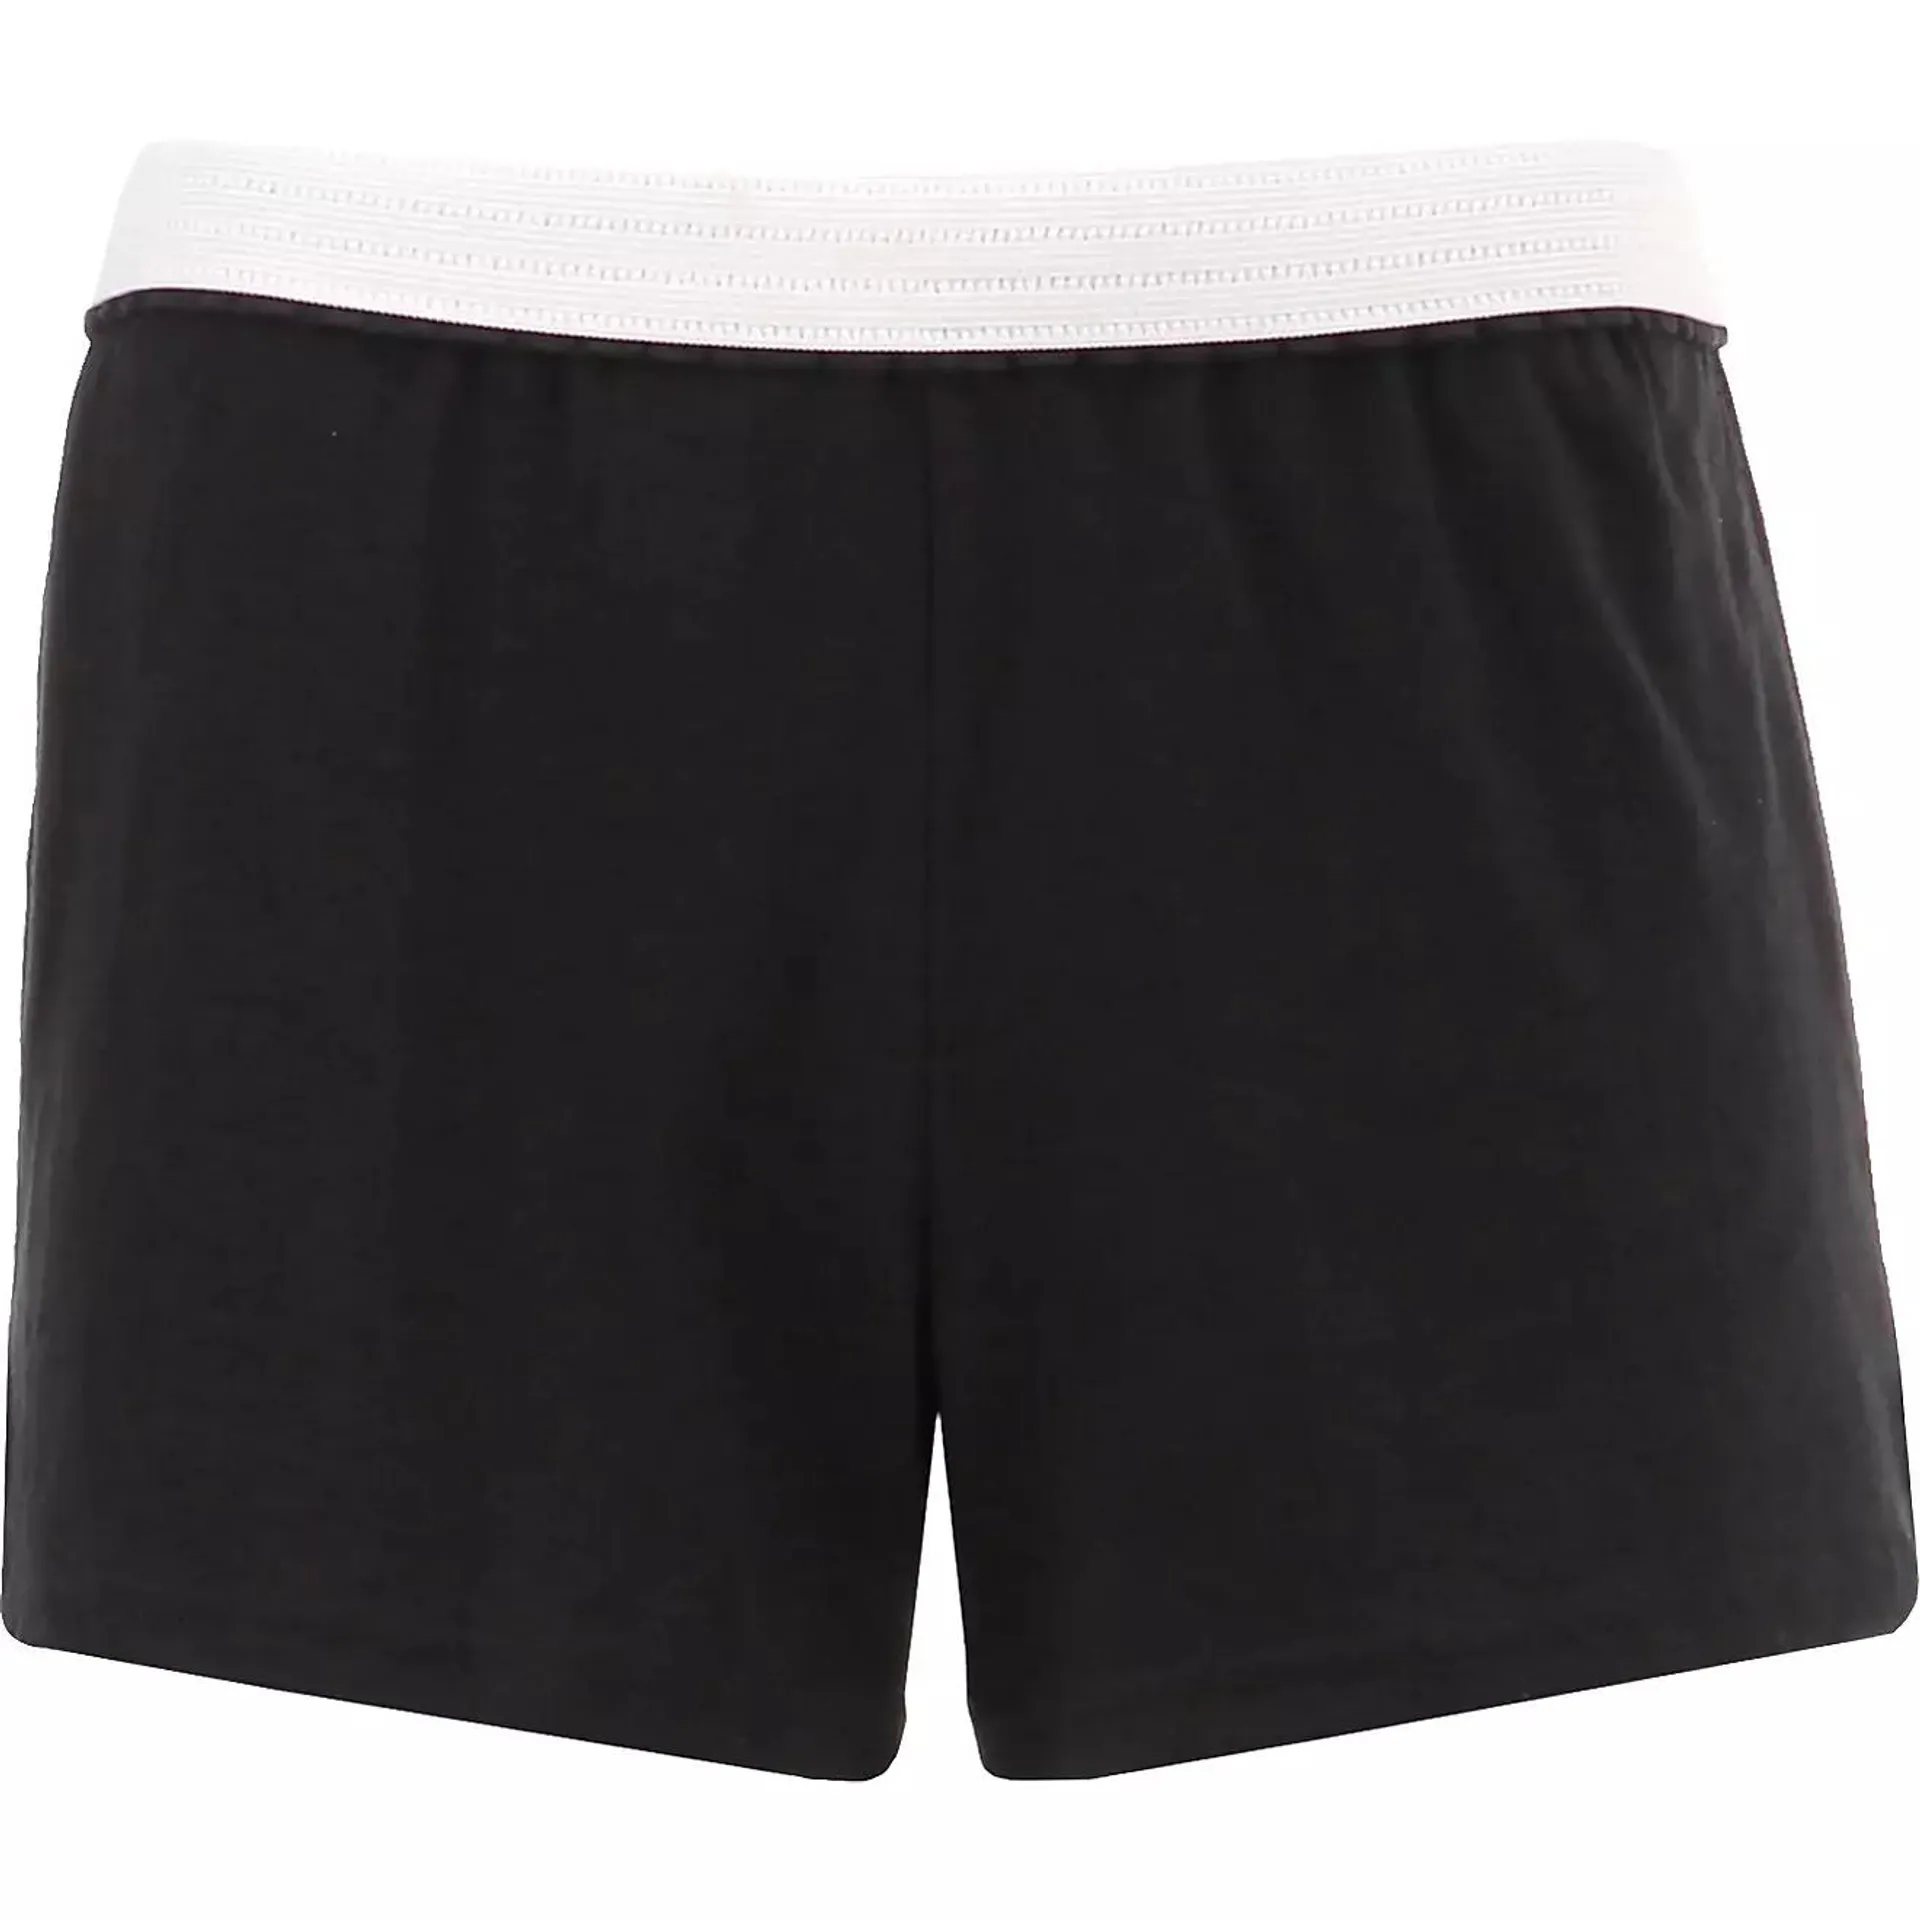 Soffe Juniors' Authentic Shorts